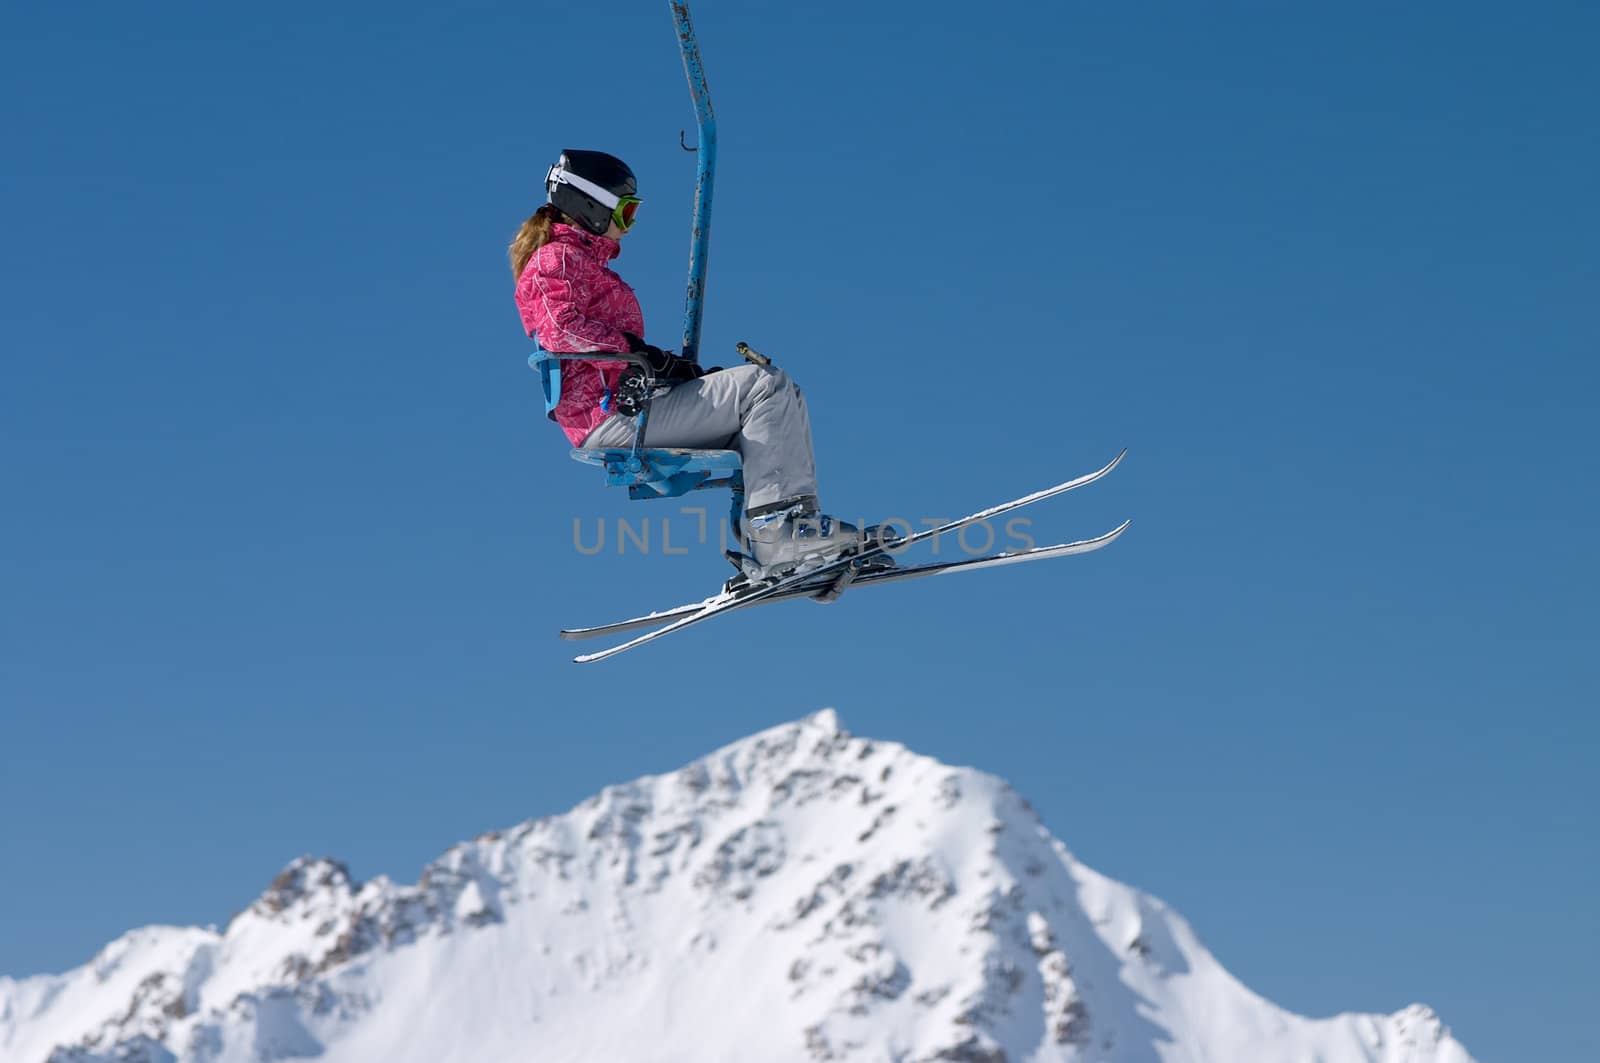 skier girl on ski lift under mountain